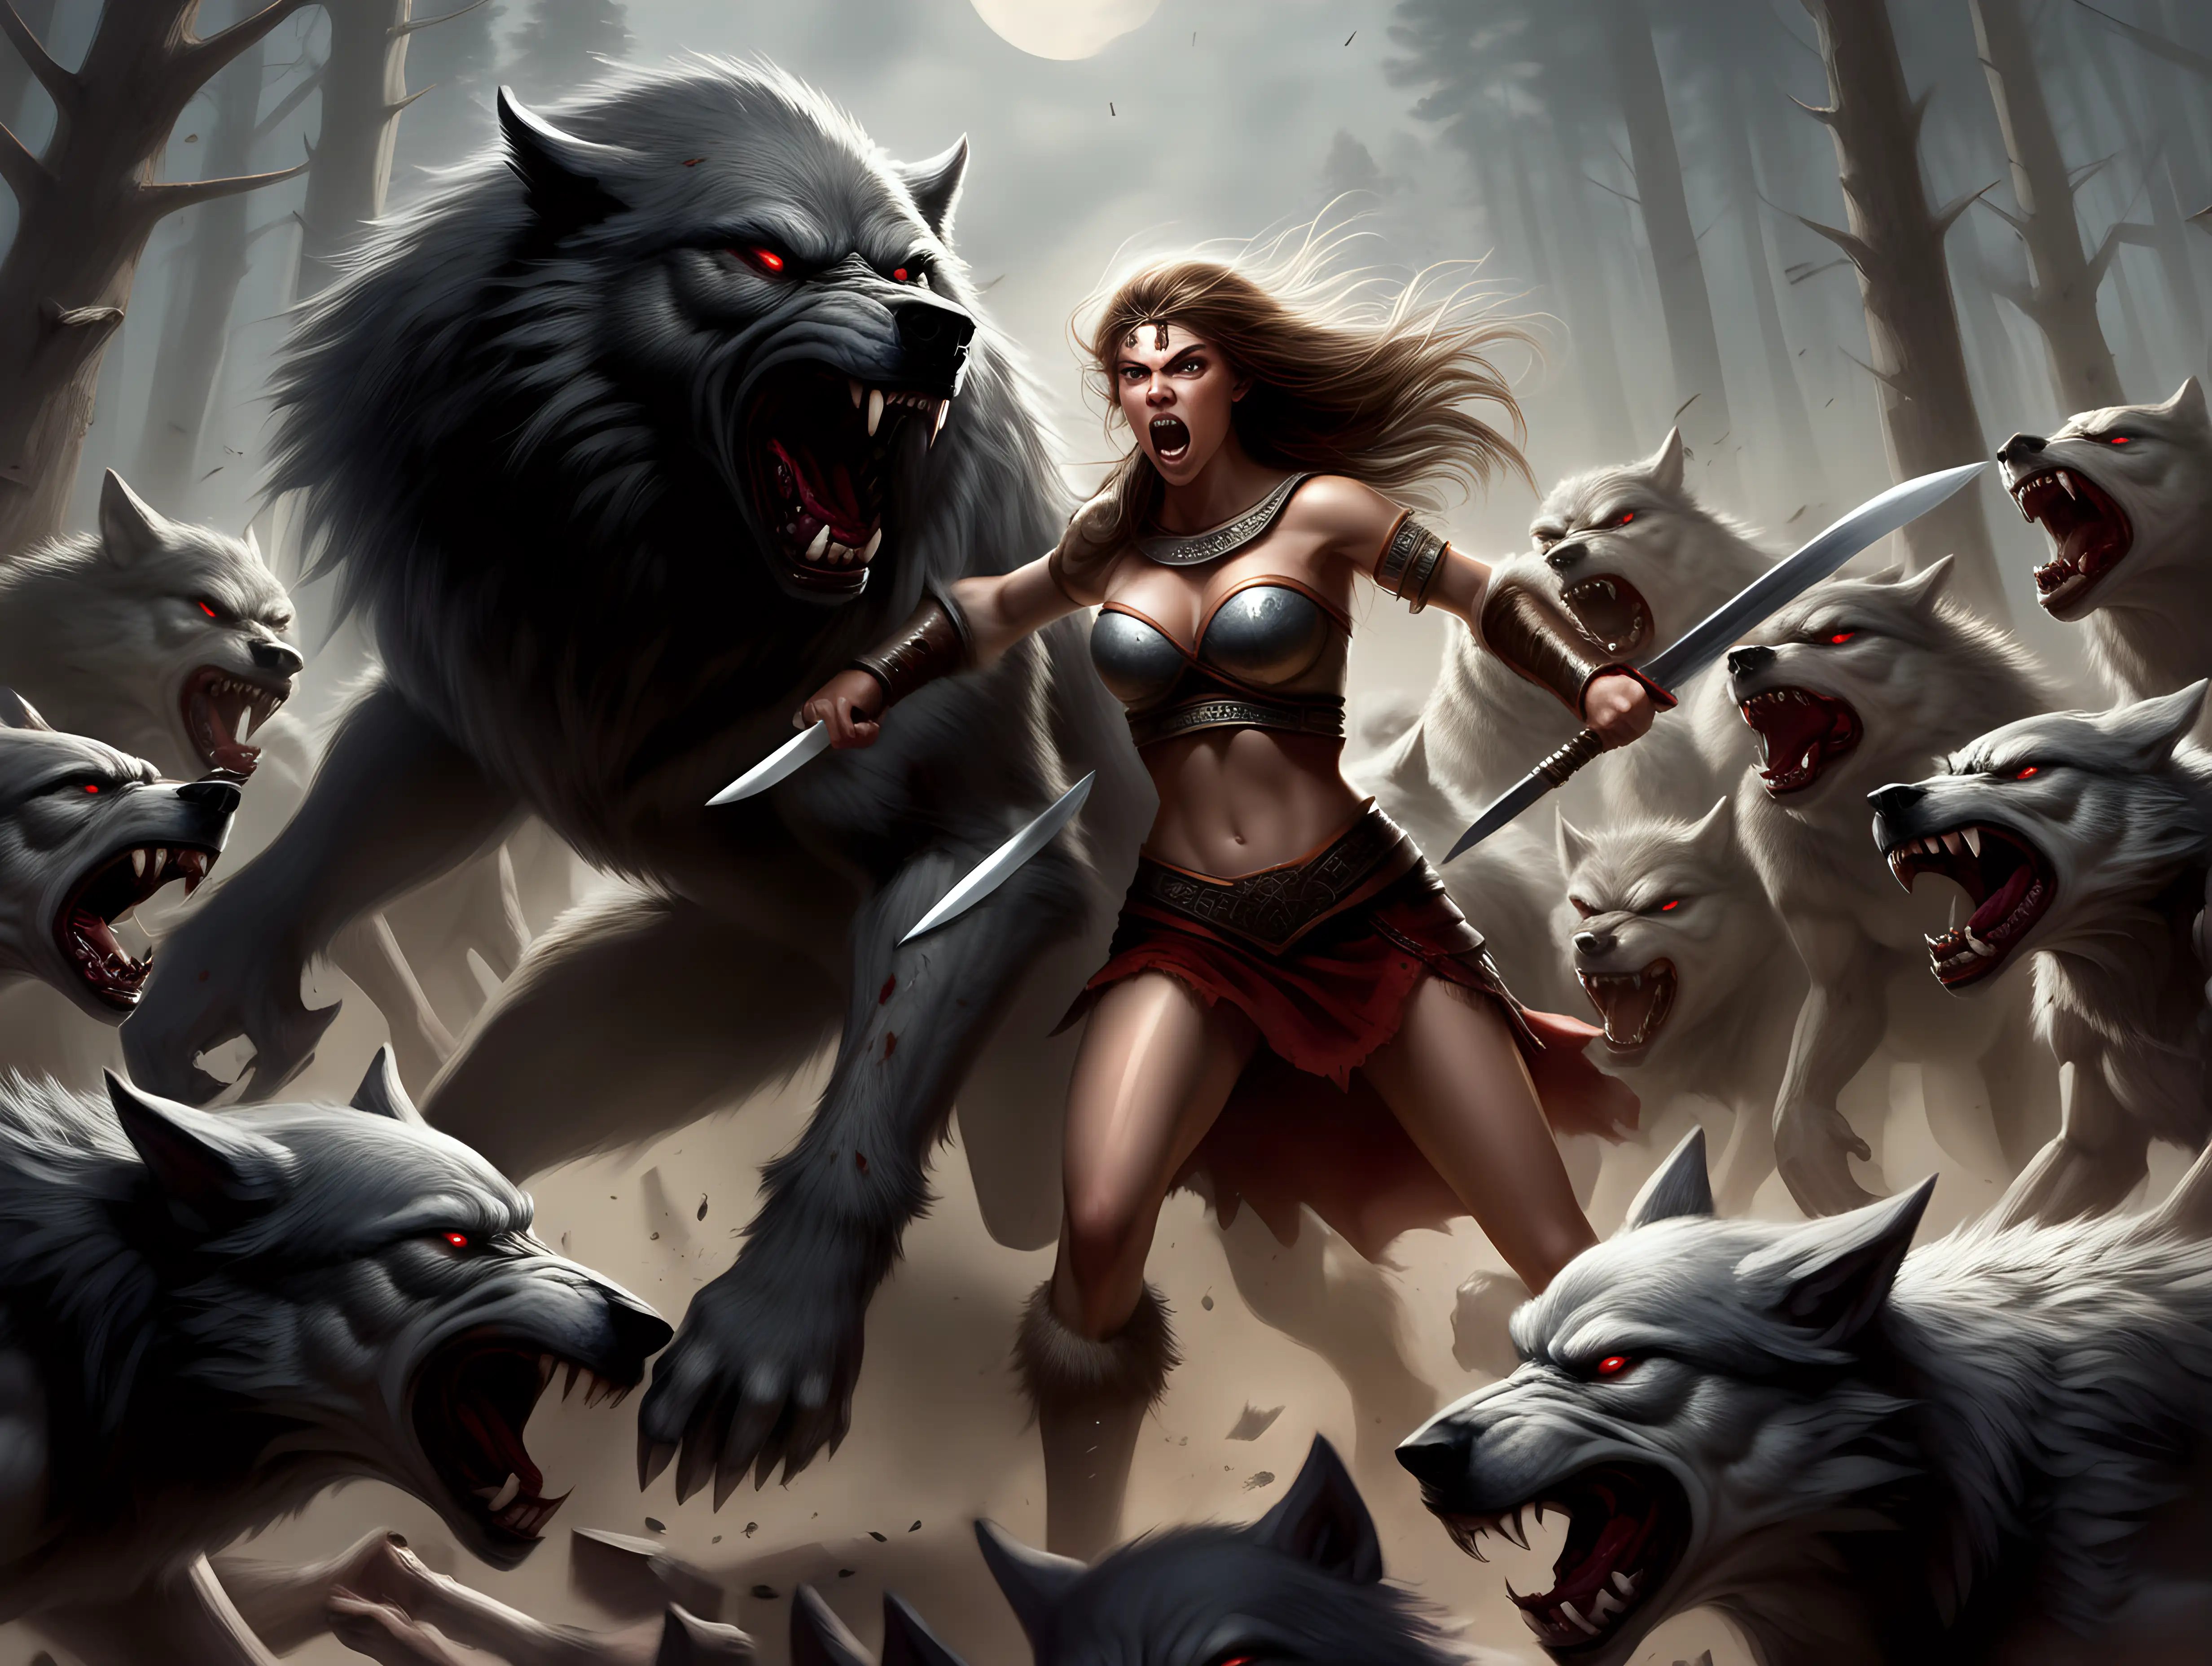 Courageous Warrior Princess Battling a Menacing Horde of Werewolves